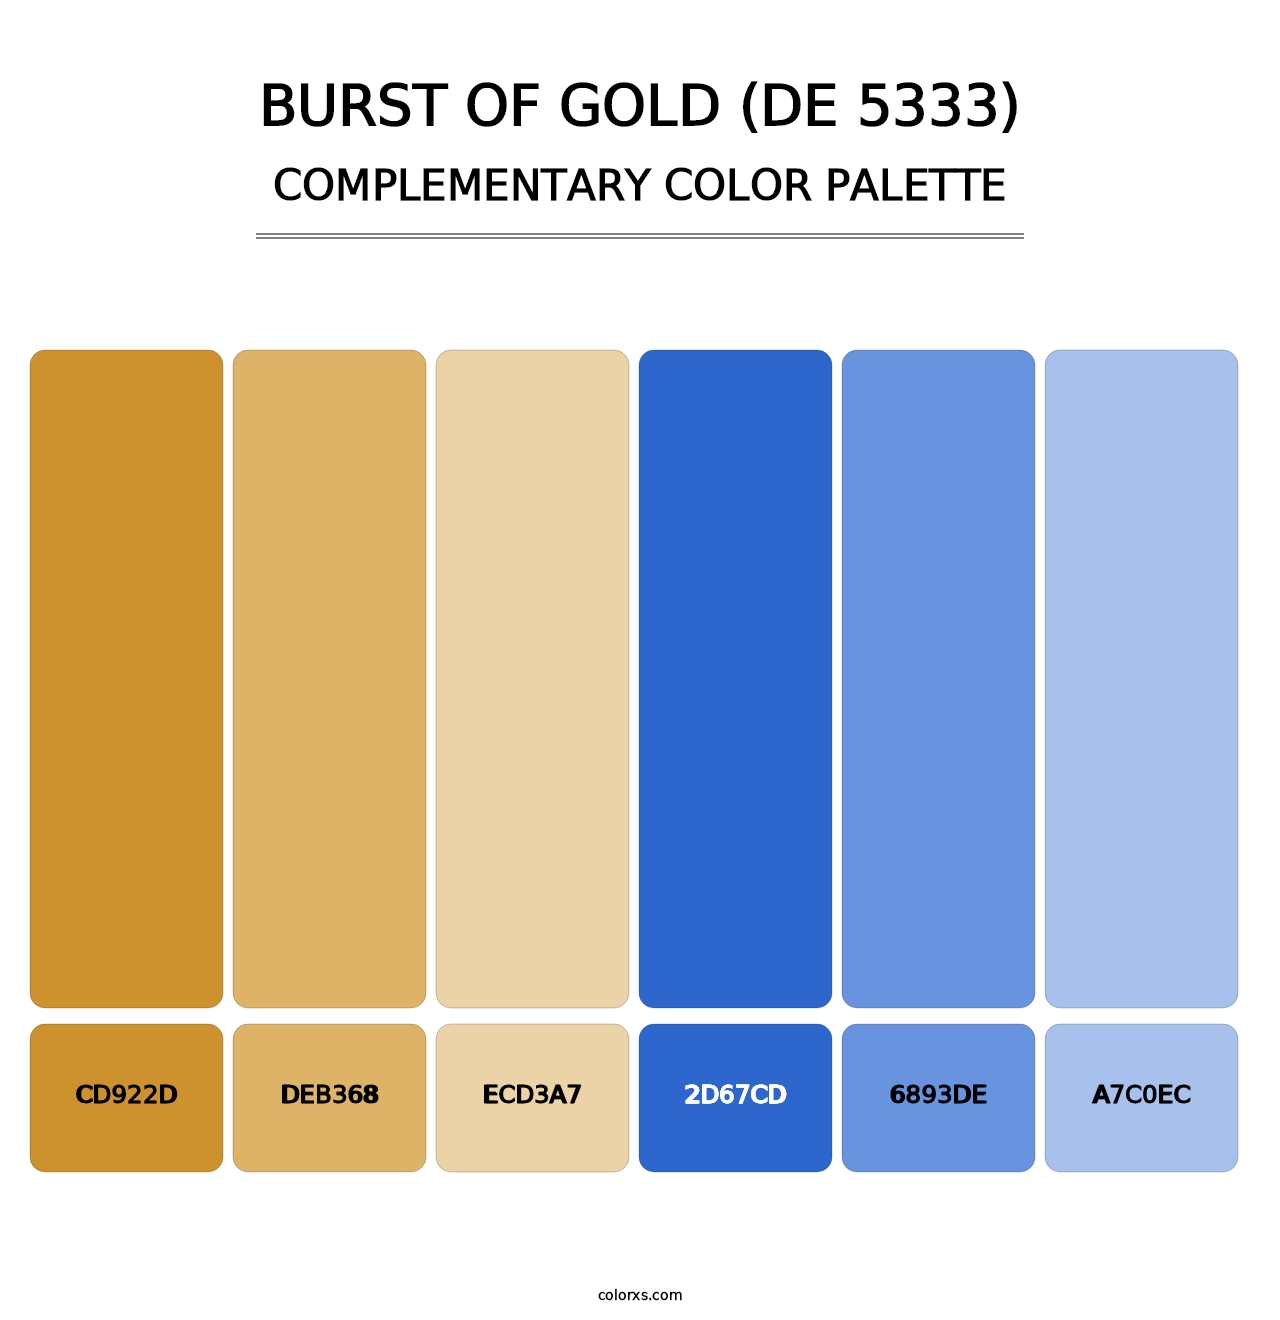 Burst of Gold (DE 5333) - Complementary Color Palette